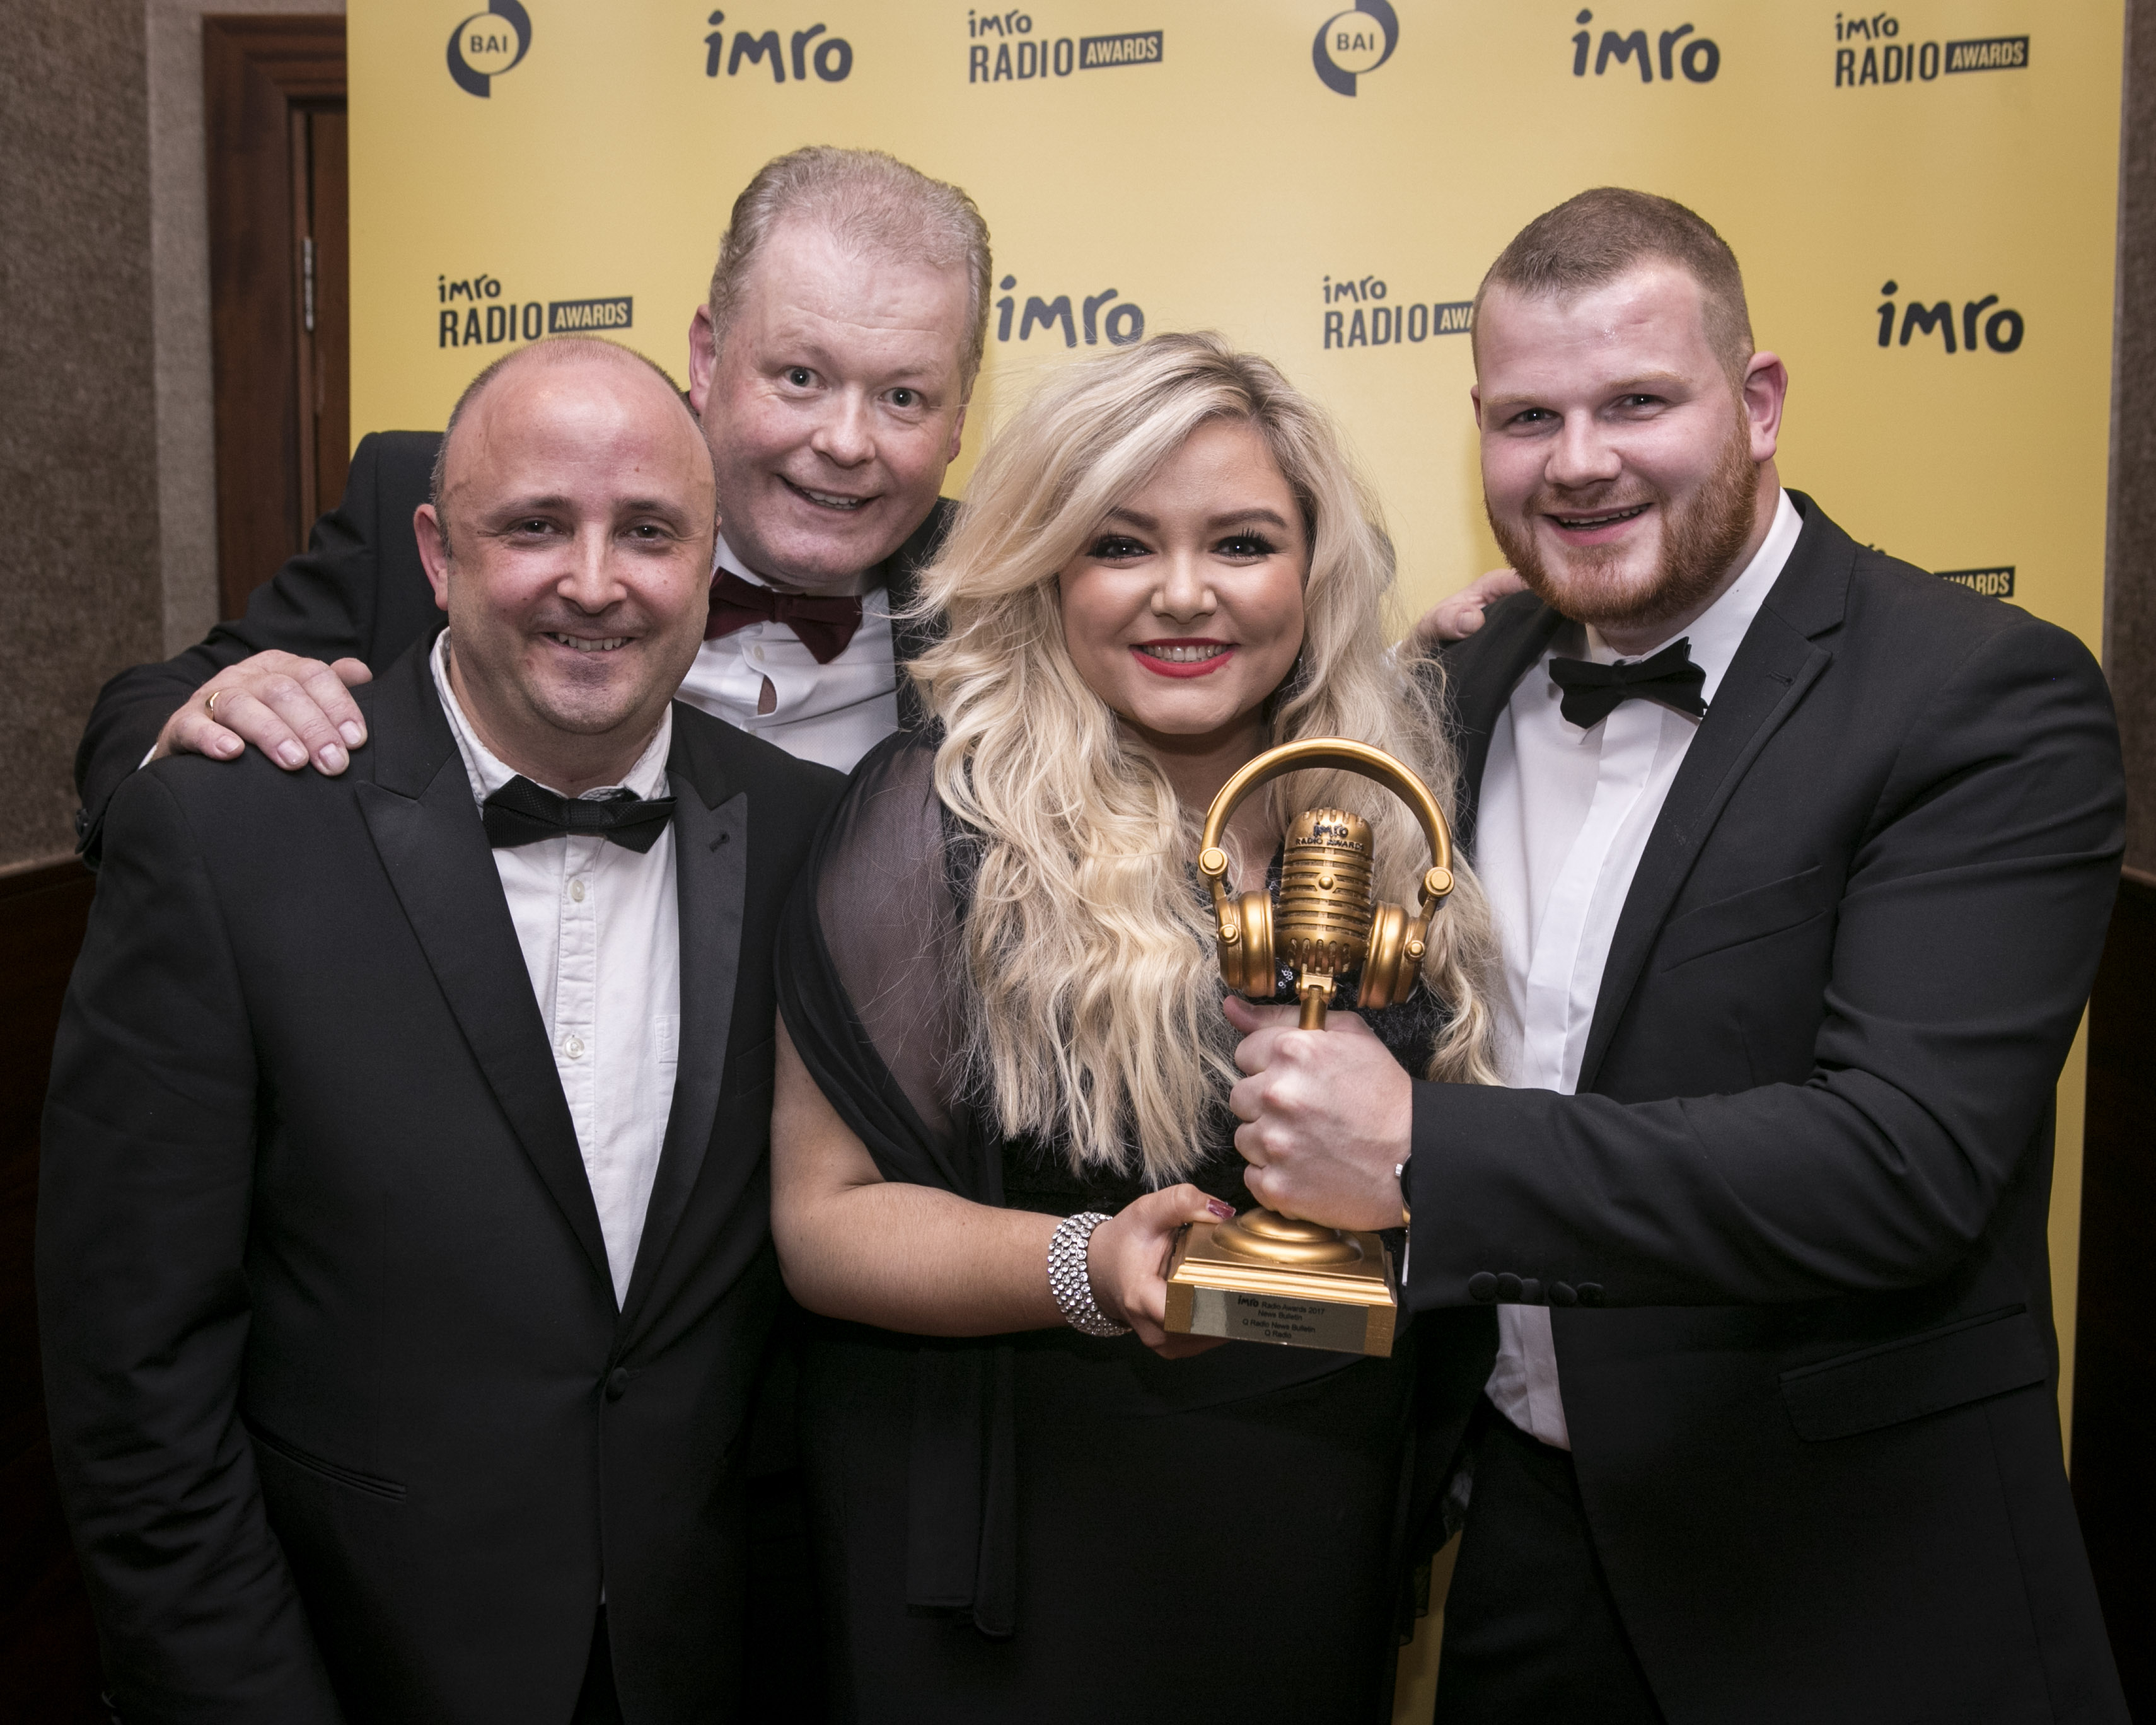 Q Radio strikes gold at the IMRO Awards